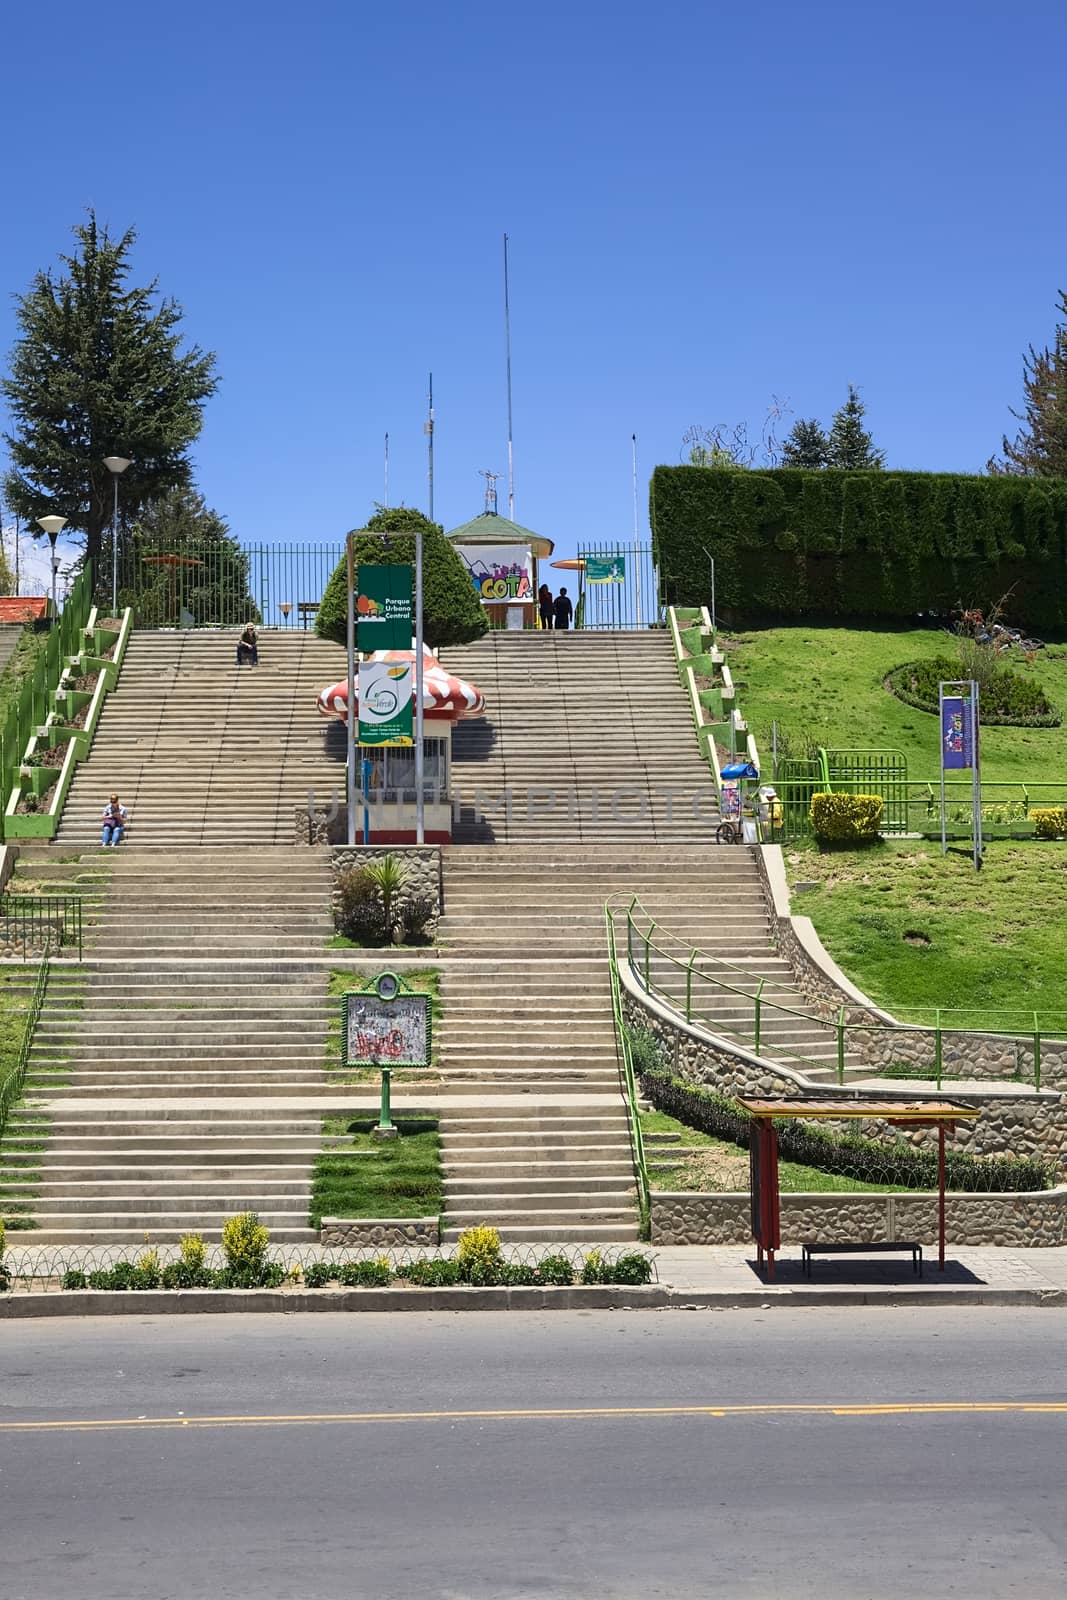 Laikacota Park in La Paz, Bolivia by ildi